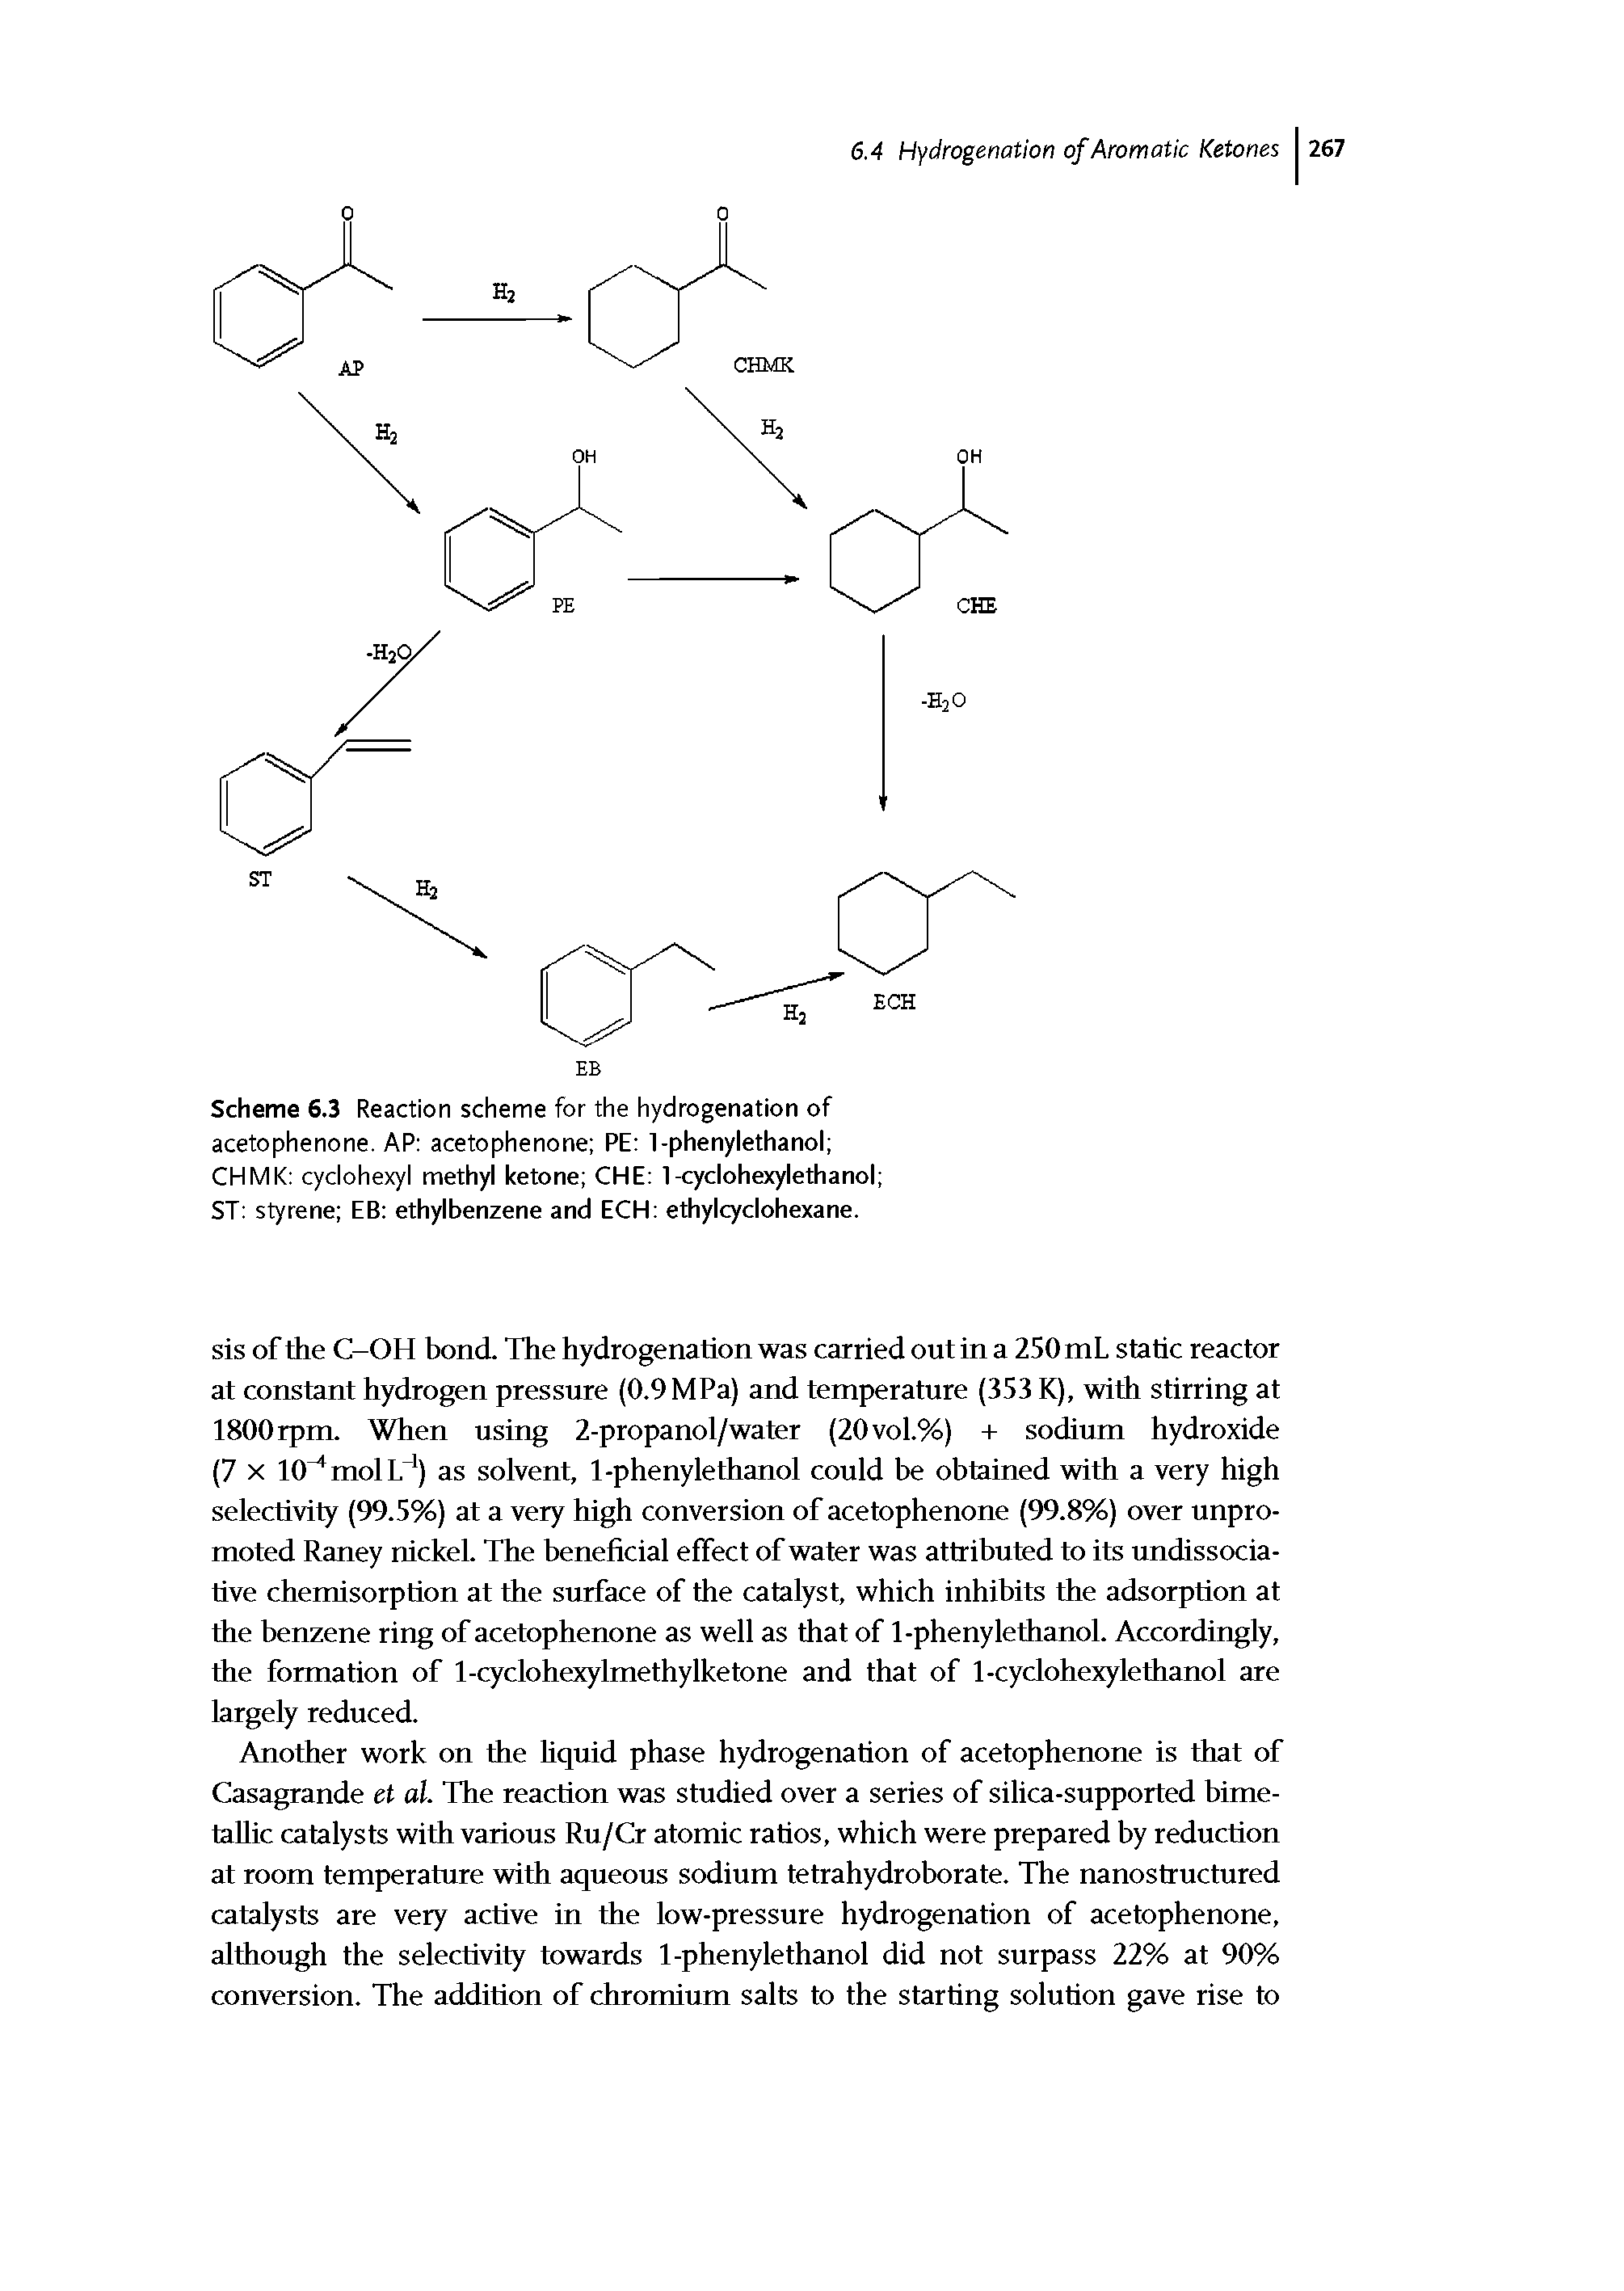 Scheme 6.3 Reaction scheme for the hydrogenation of acetophenone. AP acetophenone PE 1-phenylethanol CHMK cyclohexyl methyl ketone CHE 1-cyclohexylethanol ST styrene EB ethylbenzene and ECH ethylcyclohexane.